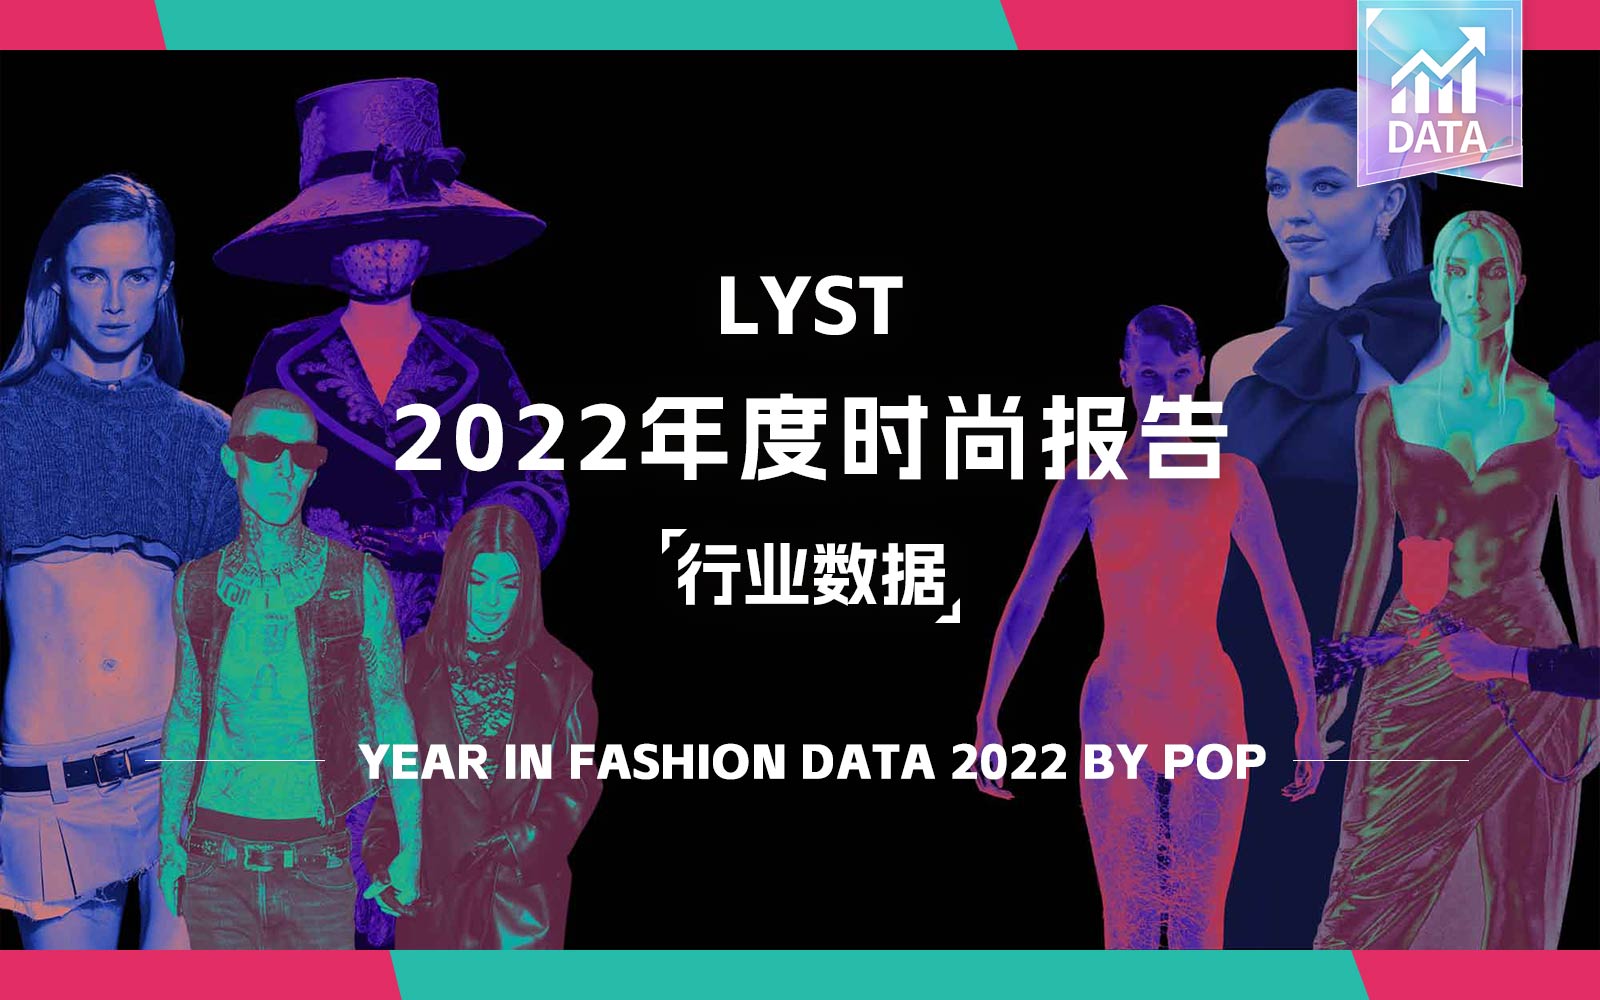 Lyst The Year in Fashion 2022